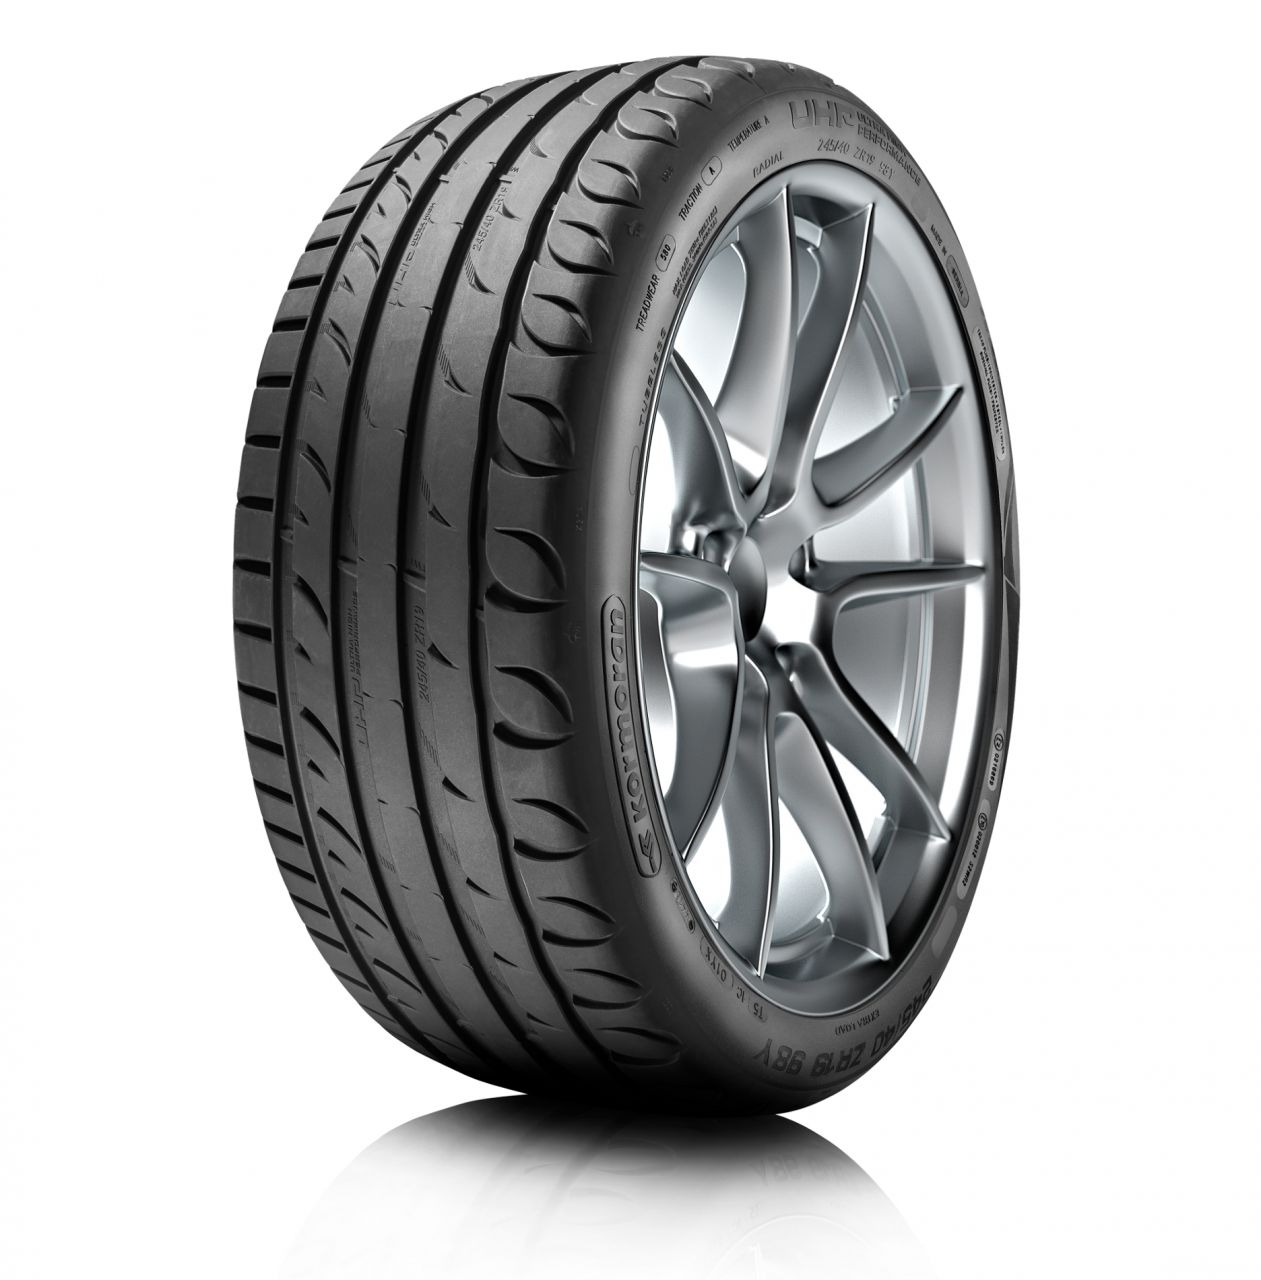 255/45R18 summer tyres